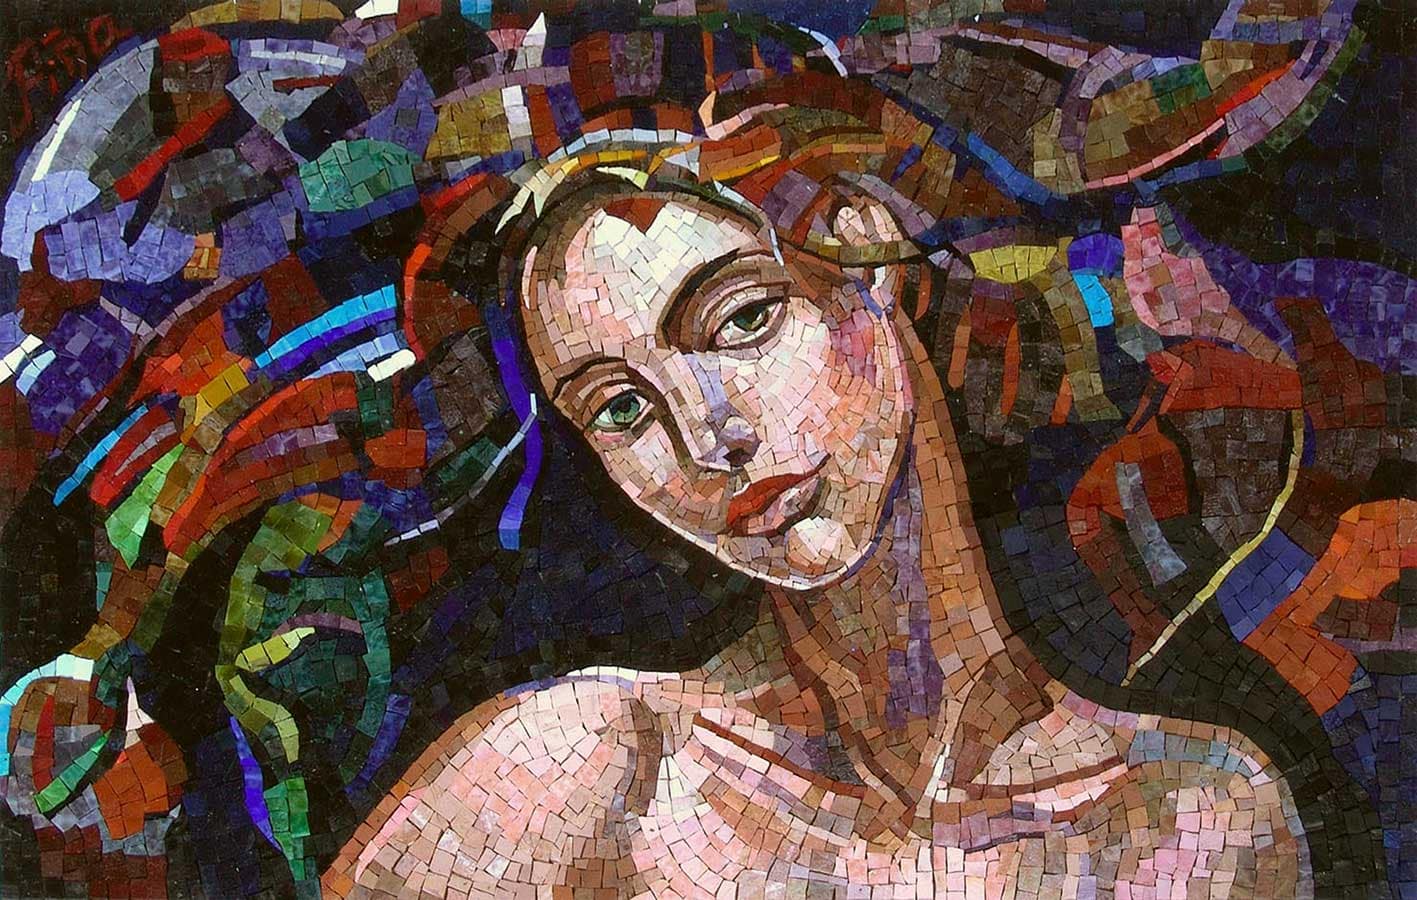 mosaic of Women in smalti glass by mosaiclegs art studio